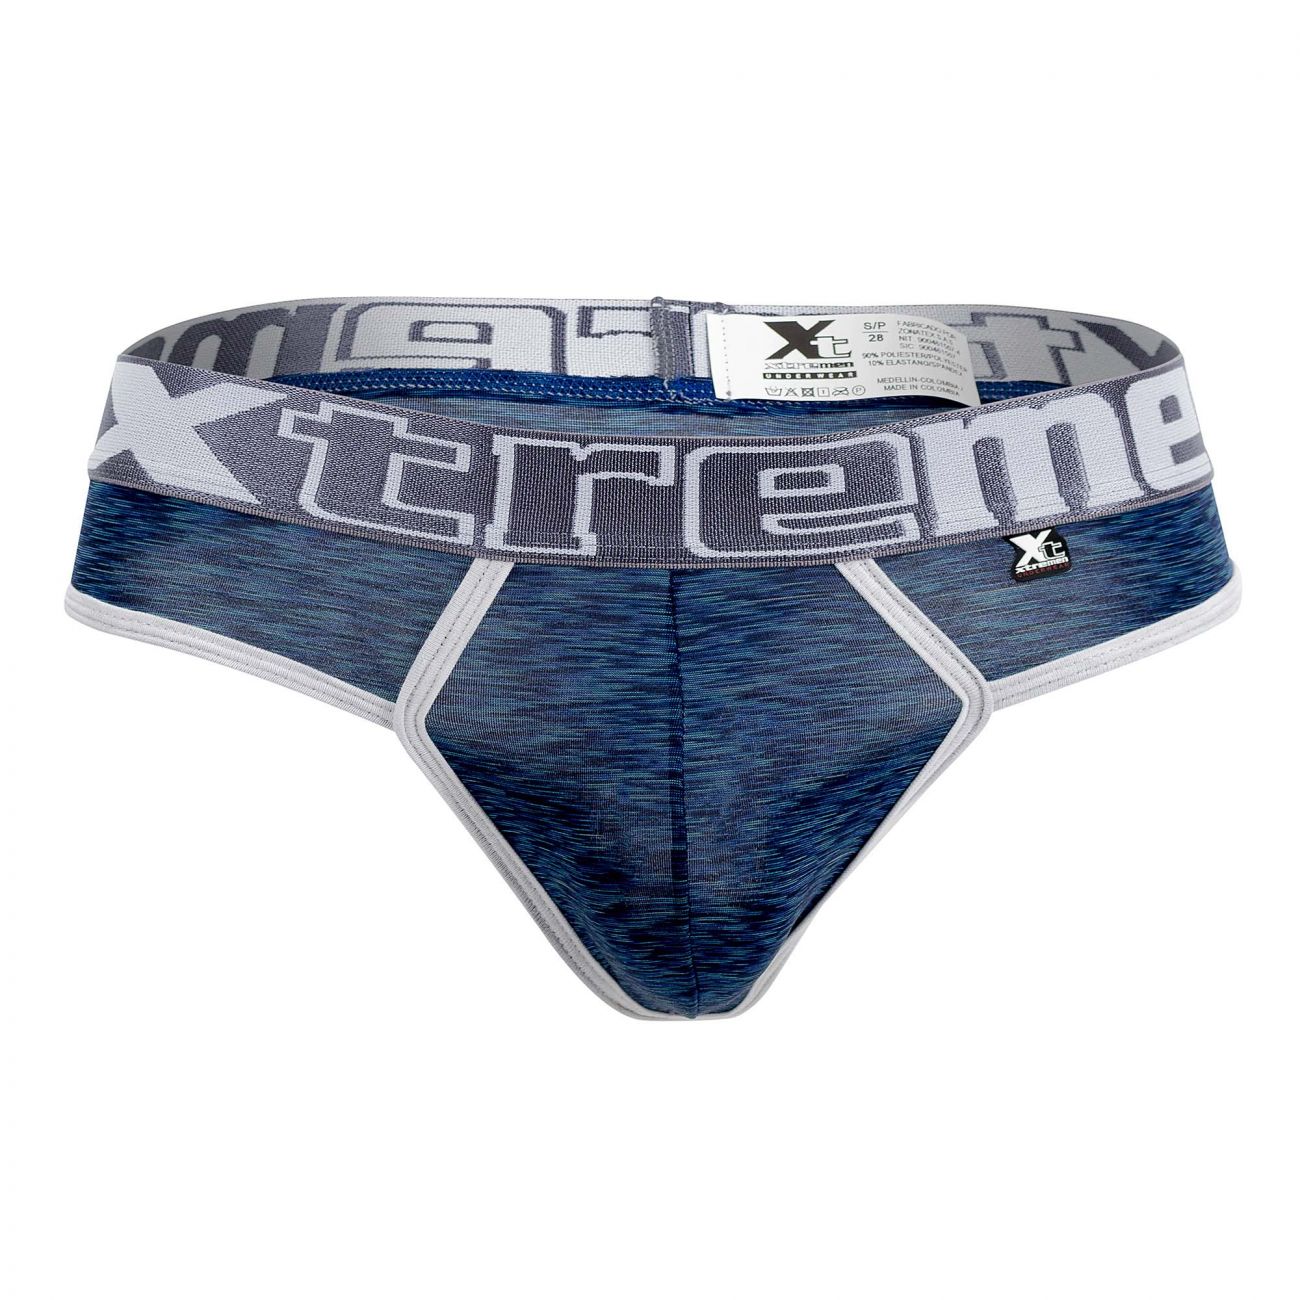 Xtremen 91072 Microfiber Thongs Dark Blue